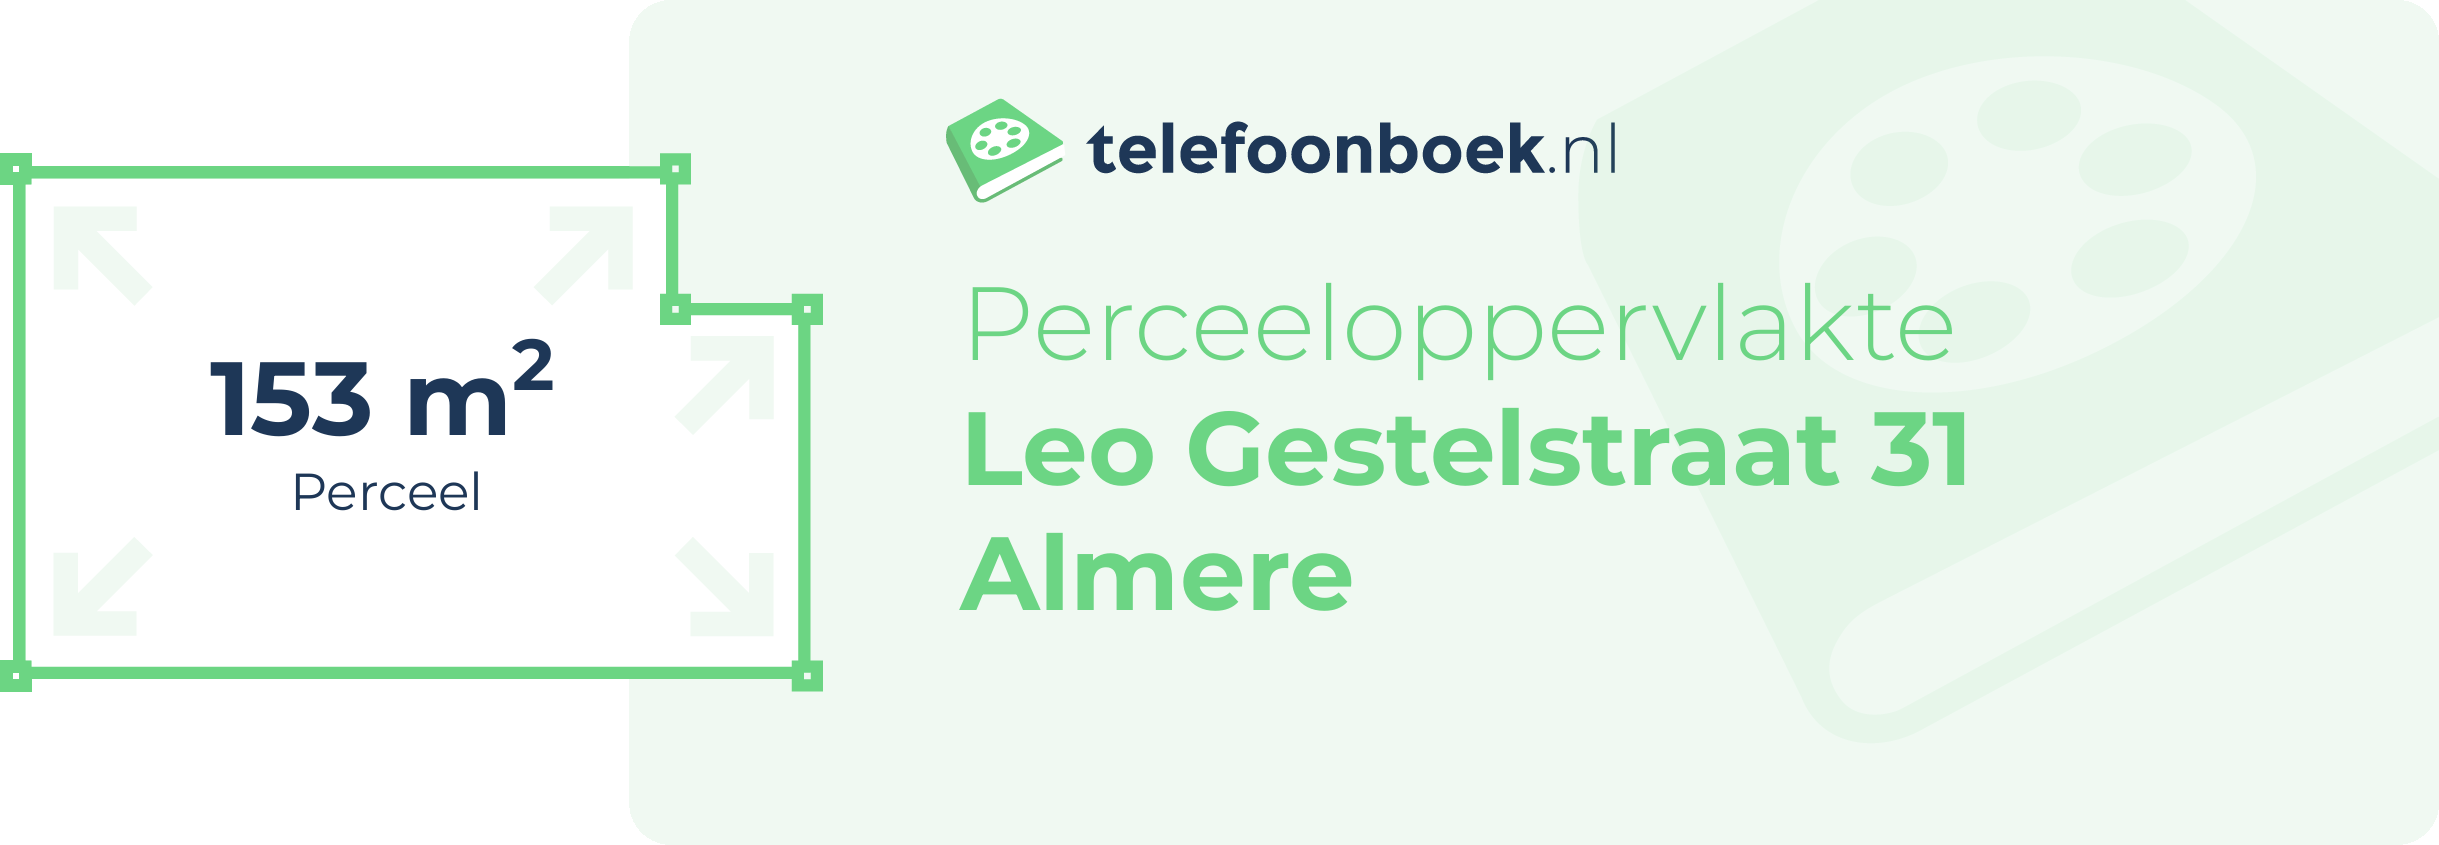 Perceeloppervlakte Leo Gestelstraat 31 Almere